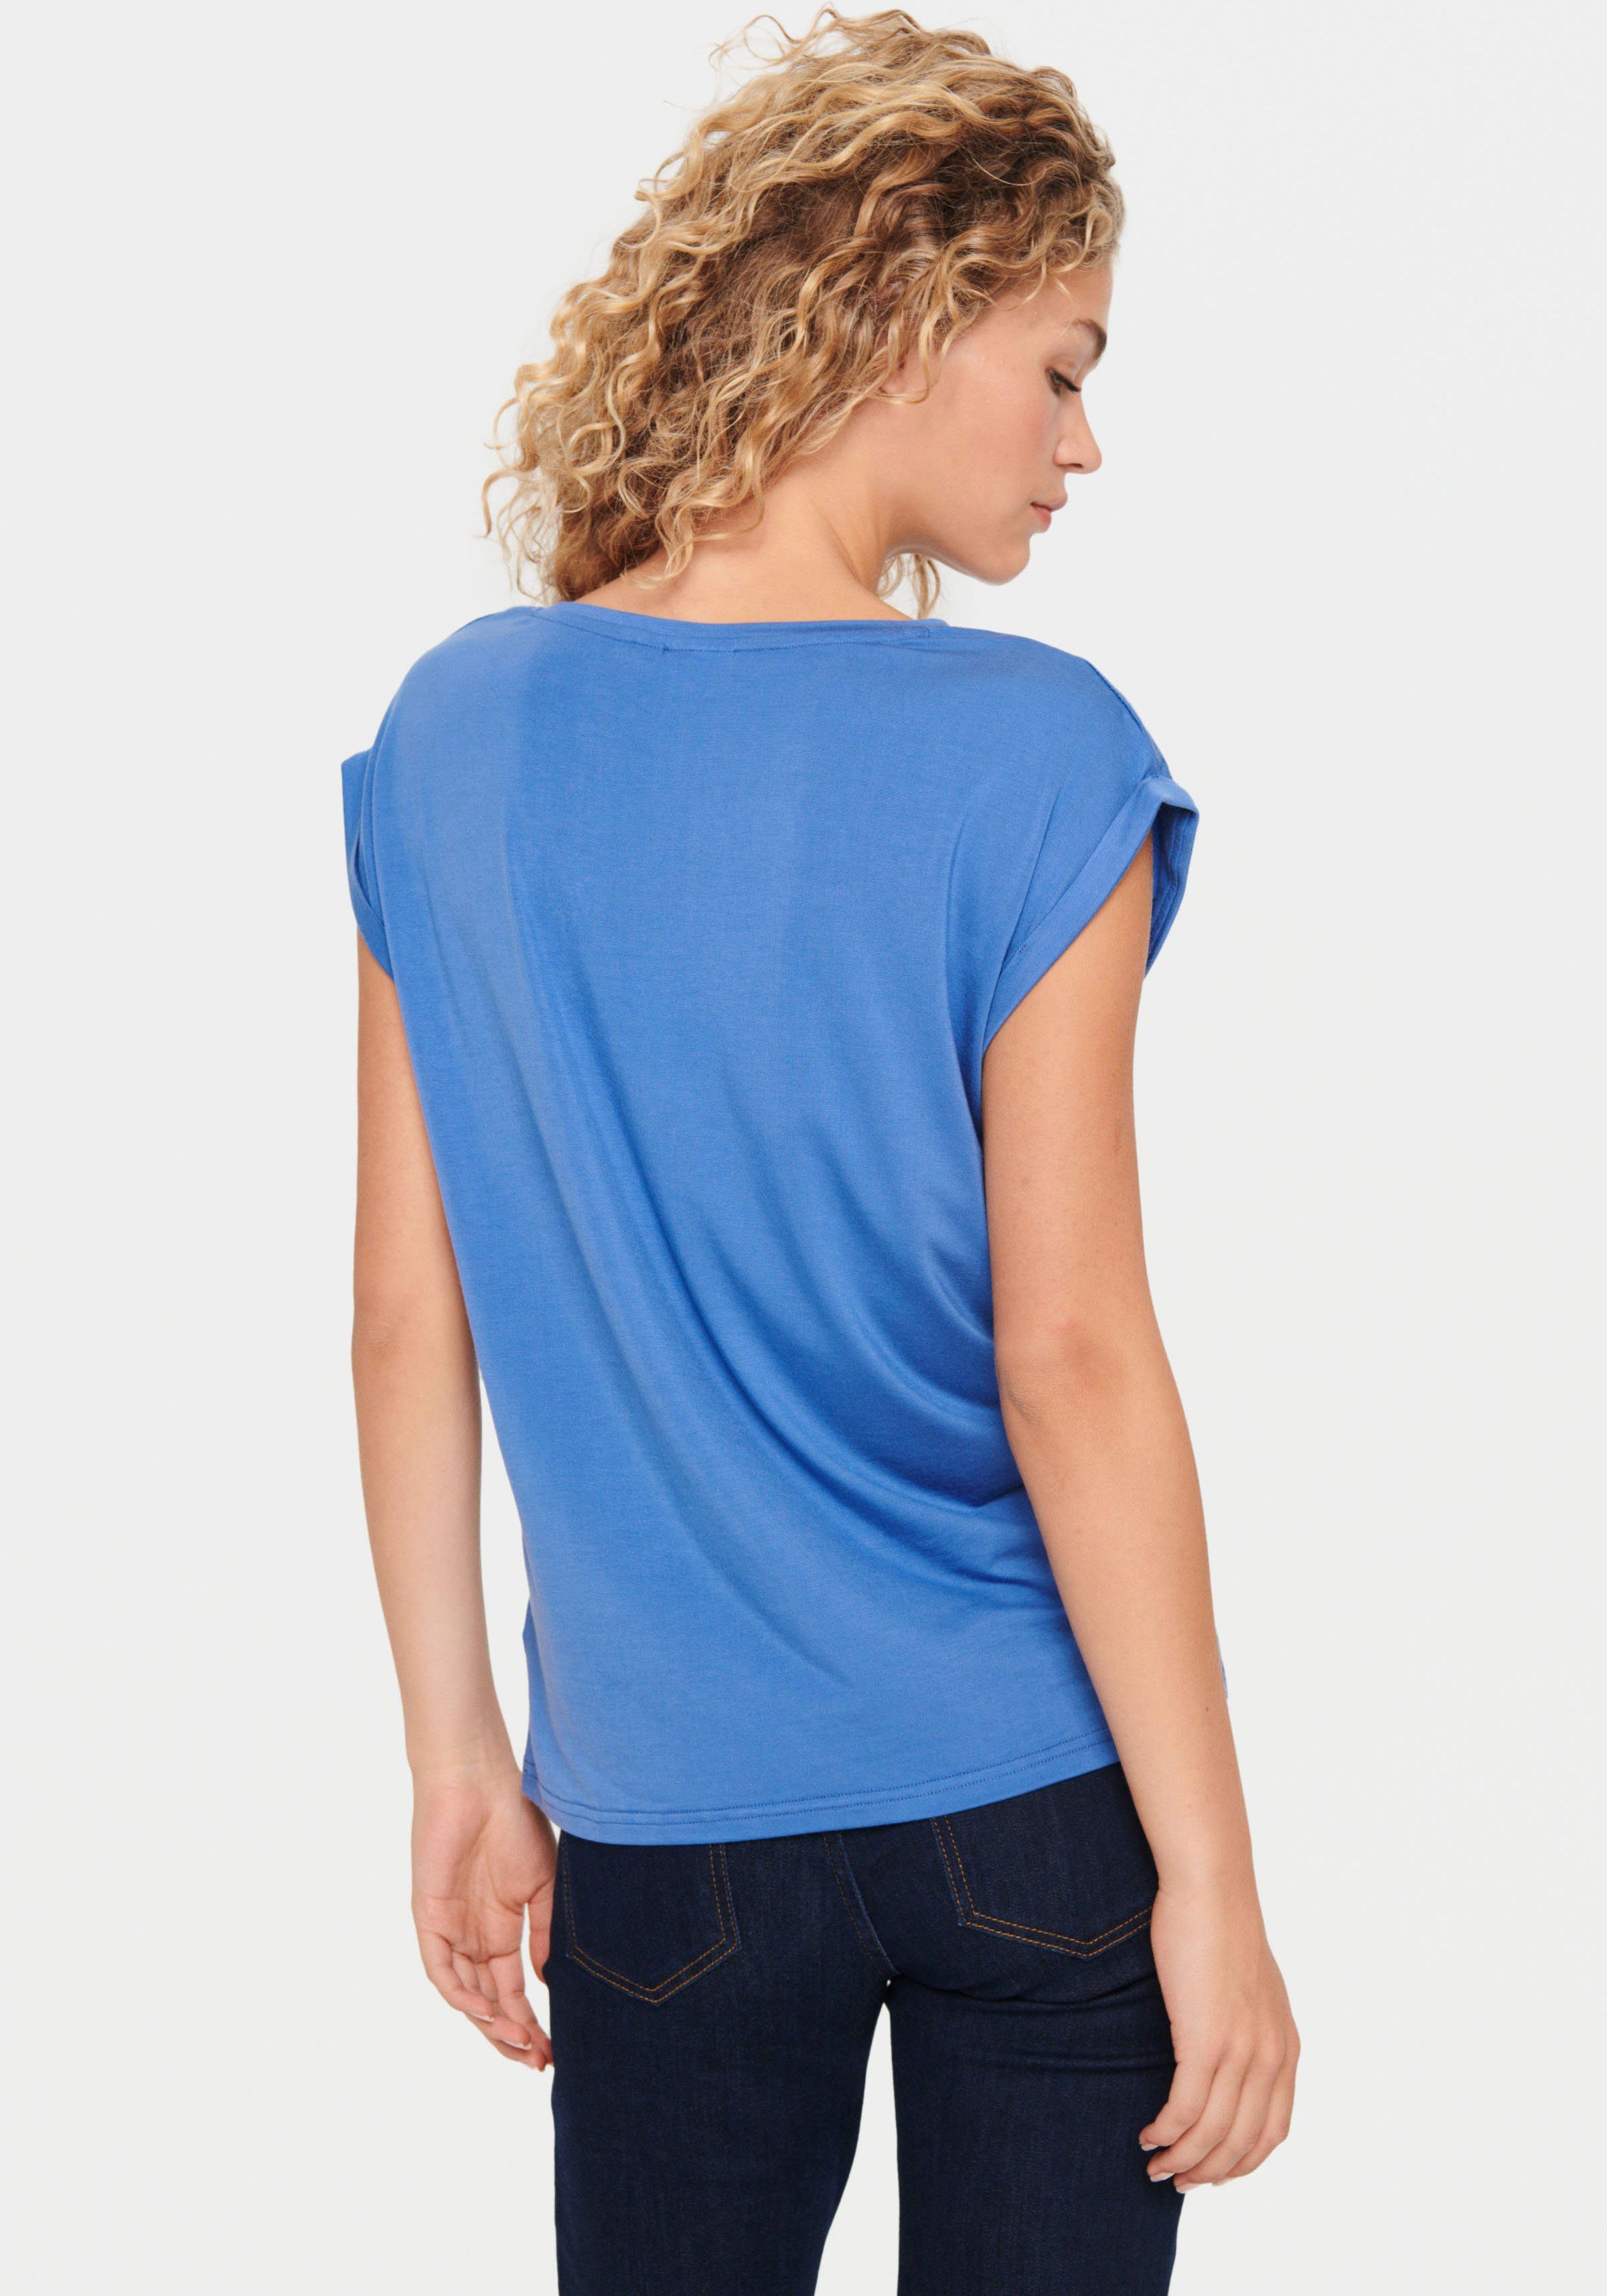 Saint Tropez Kurzarmshirt Dutch AdeliaSZ Blue U1520, T-Shirt